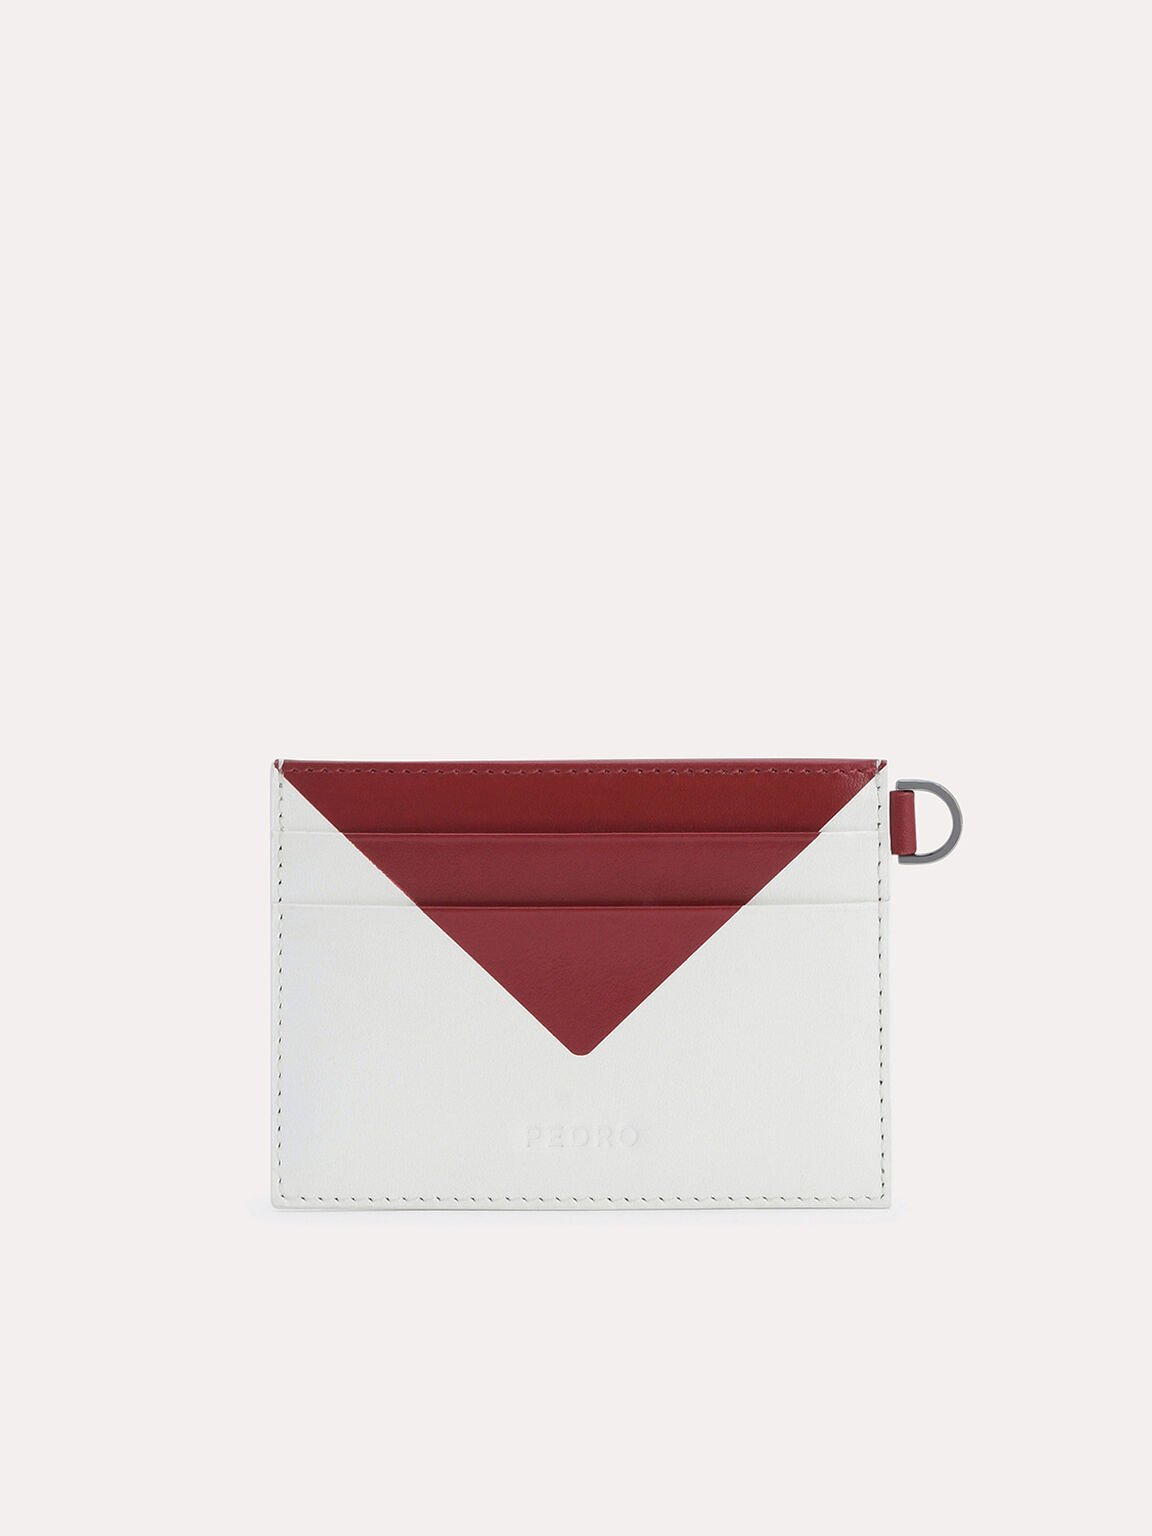 Three-Toned Leather Cardholder, White